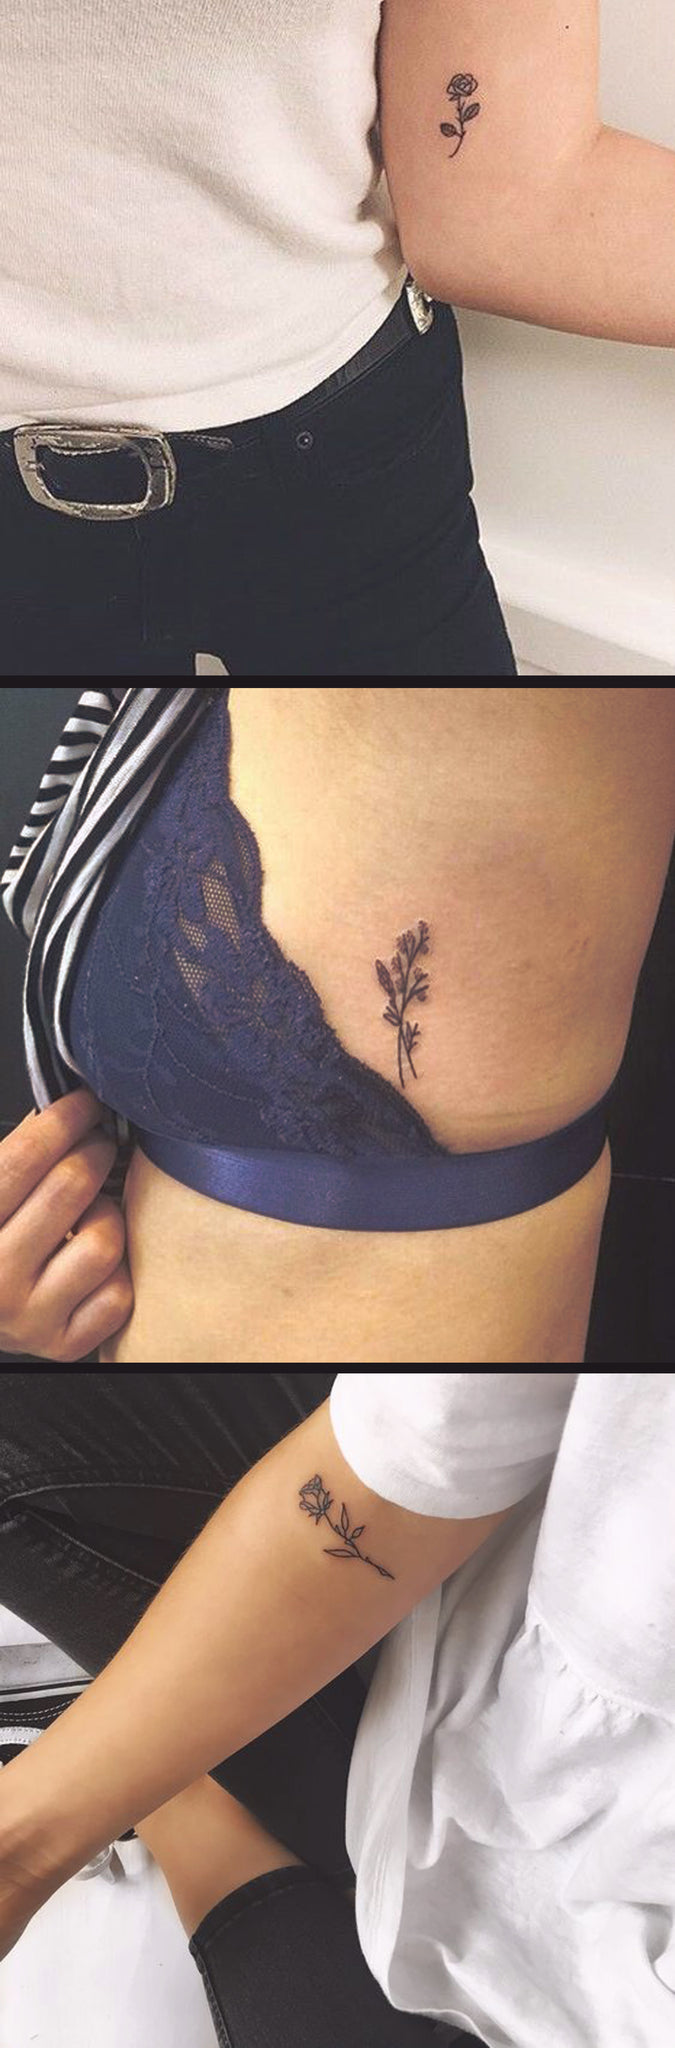 Small Flower Tattoo Ideas for Women - Minimal Wild Rose Rib Tatouage - Tiny Arm Wrist Floral Ideas Del Tatuaje - www.MyBodiArt.com